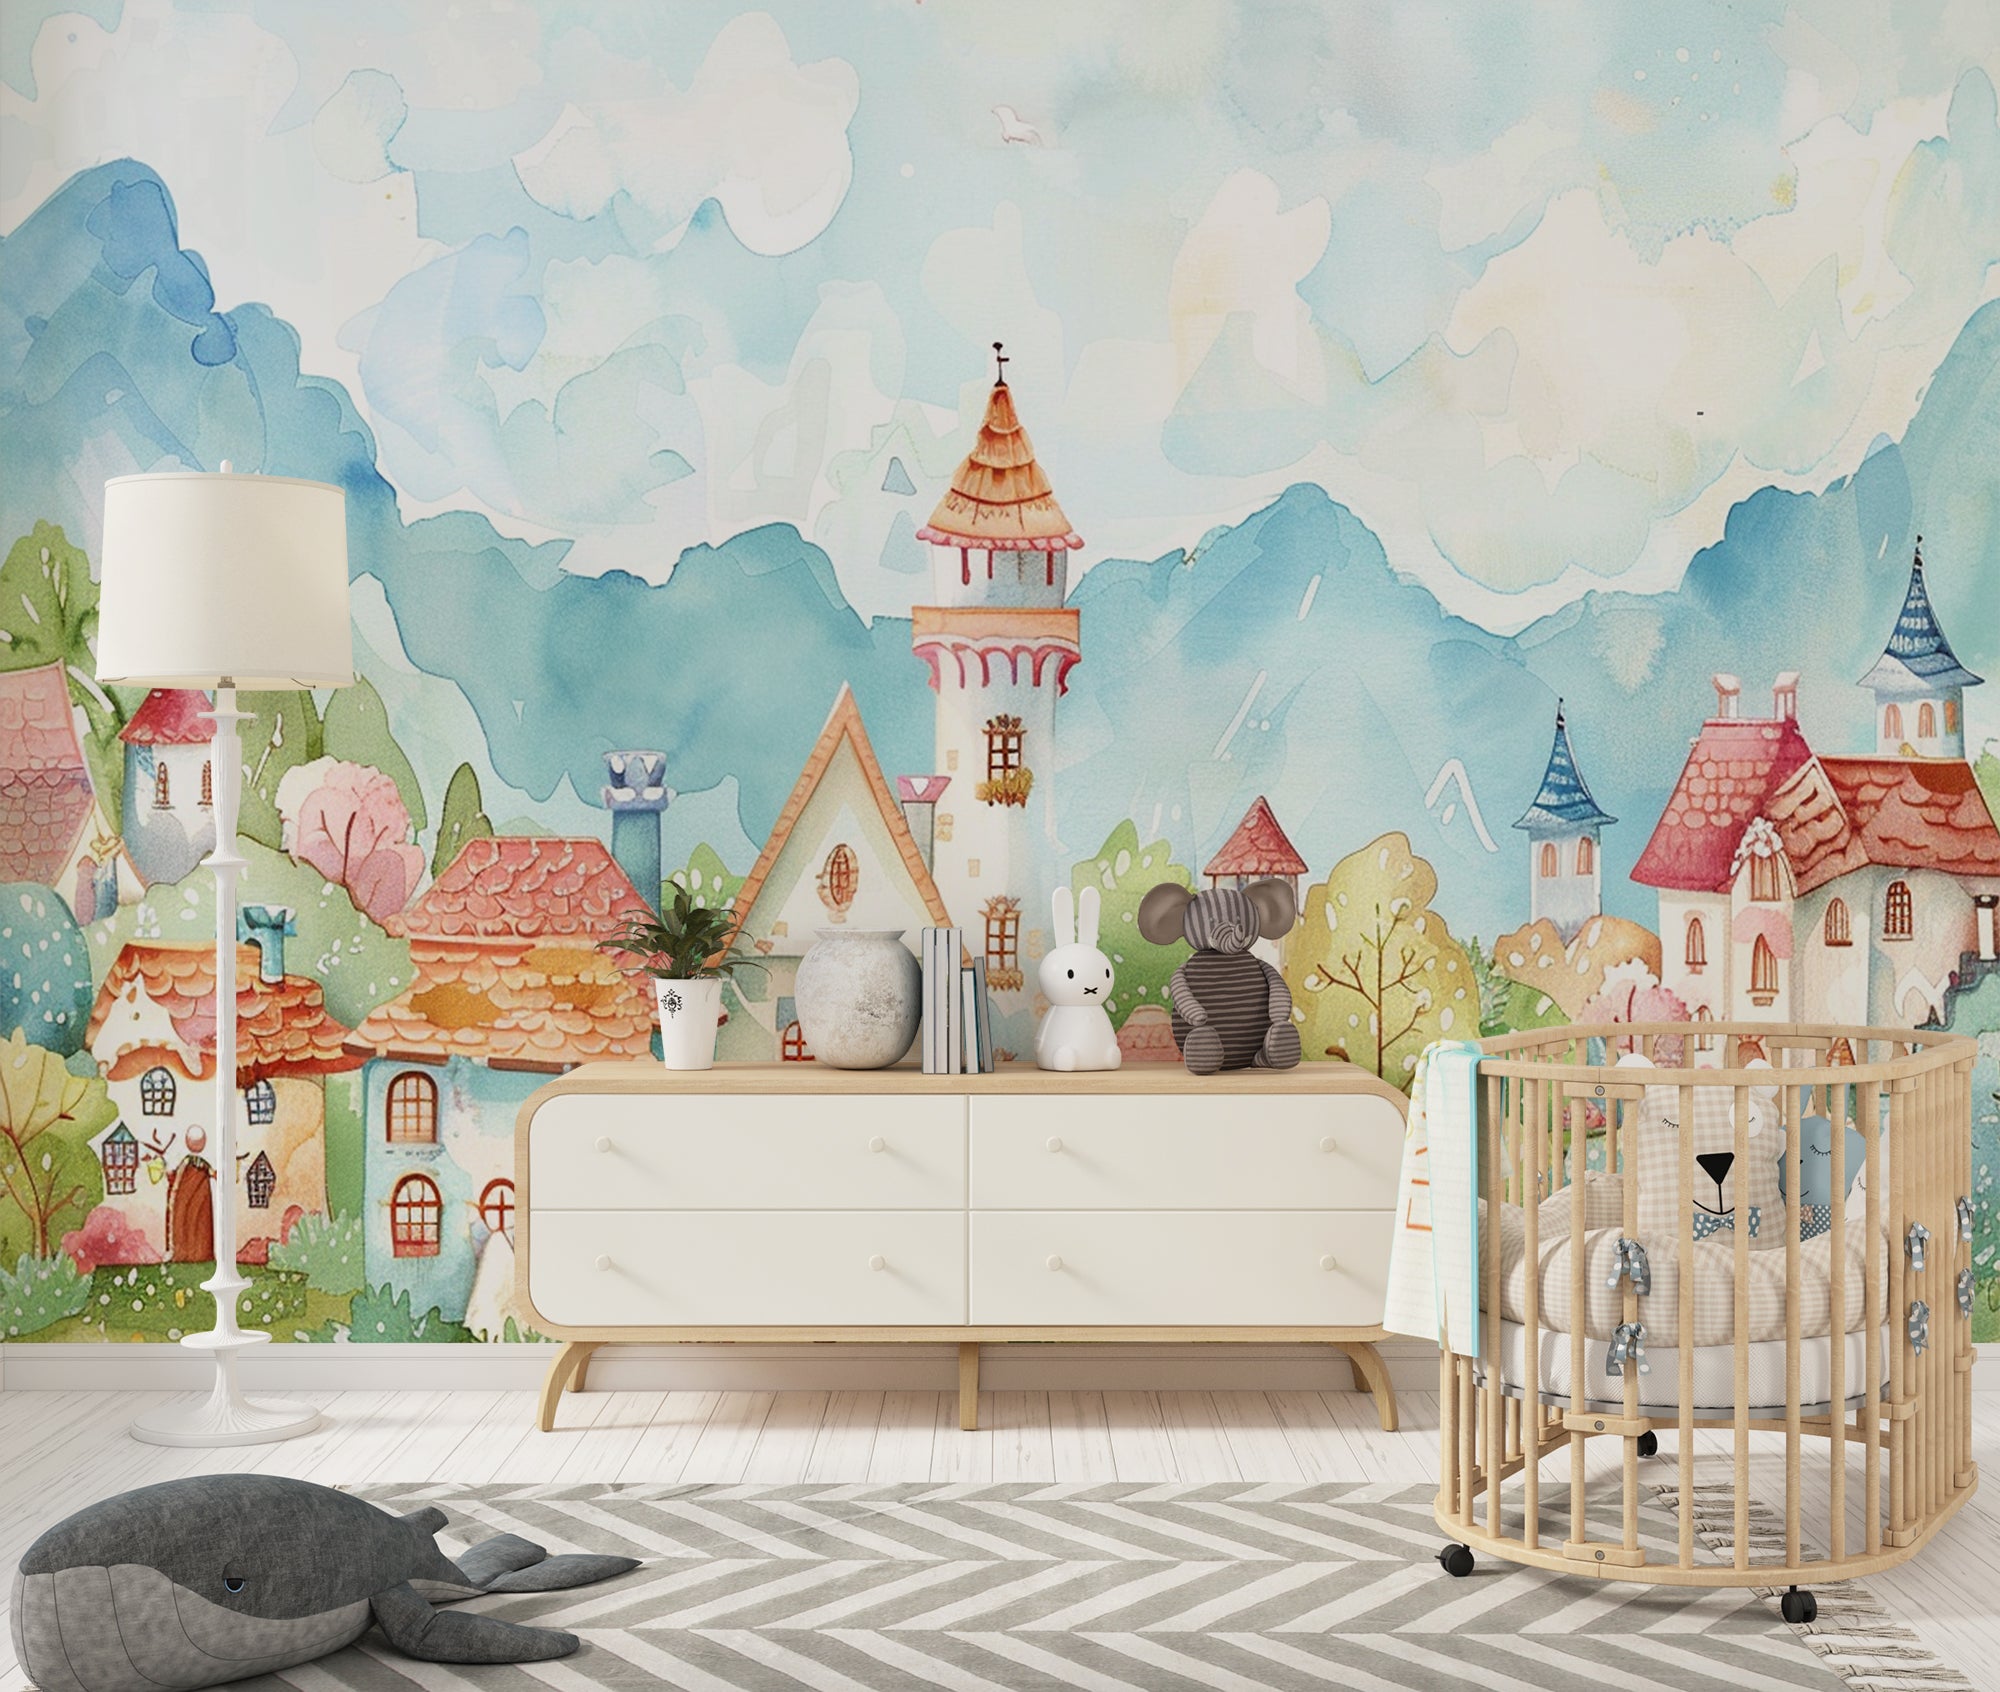 Imaginary Escape: Fantasy Village Wallpaper für Kinder